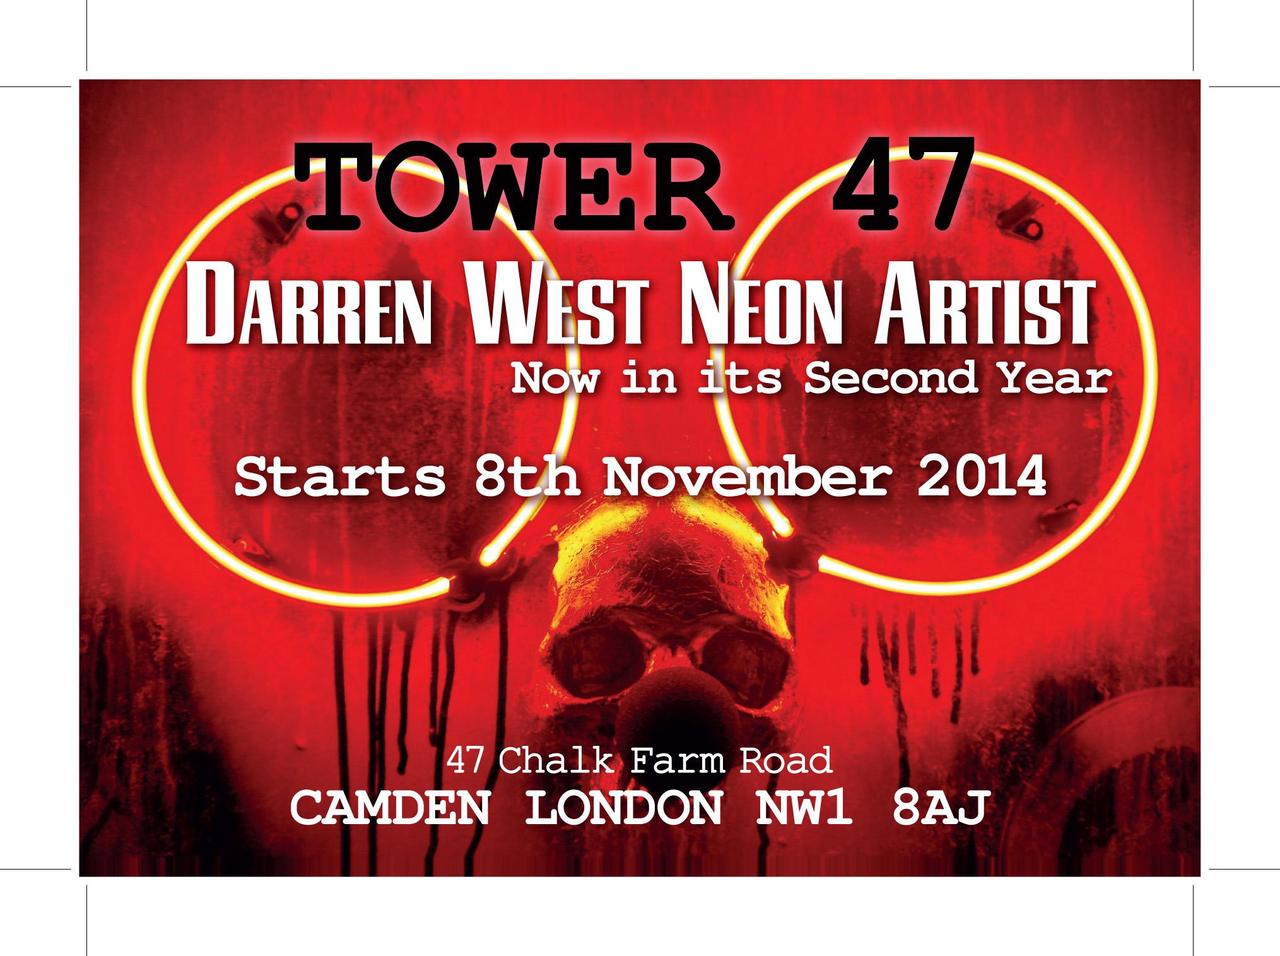 Neon art show at @Tower47Camden  Starts 8th Nov . #neonart #neon #camden #art #lightart #lndon http://t.co/j6jFsWL3ND